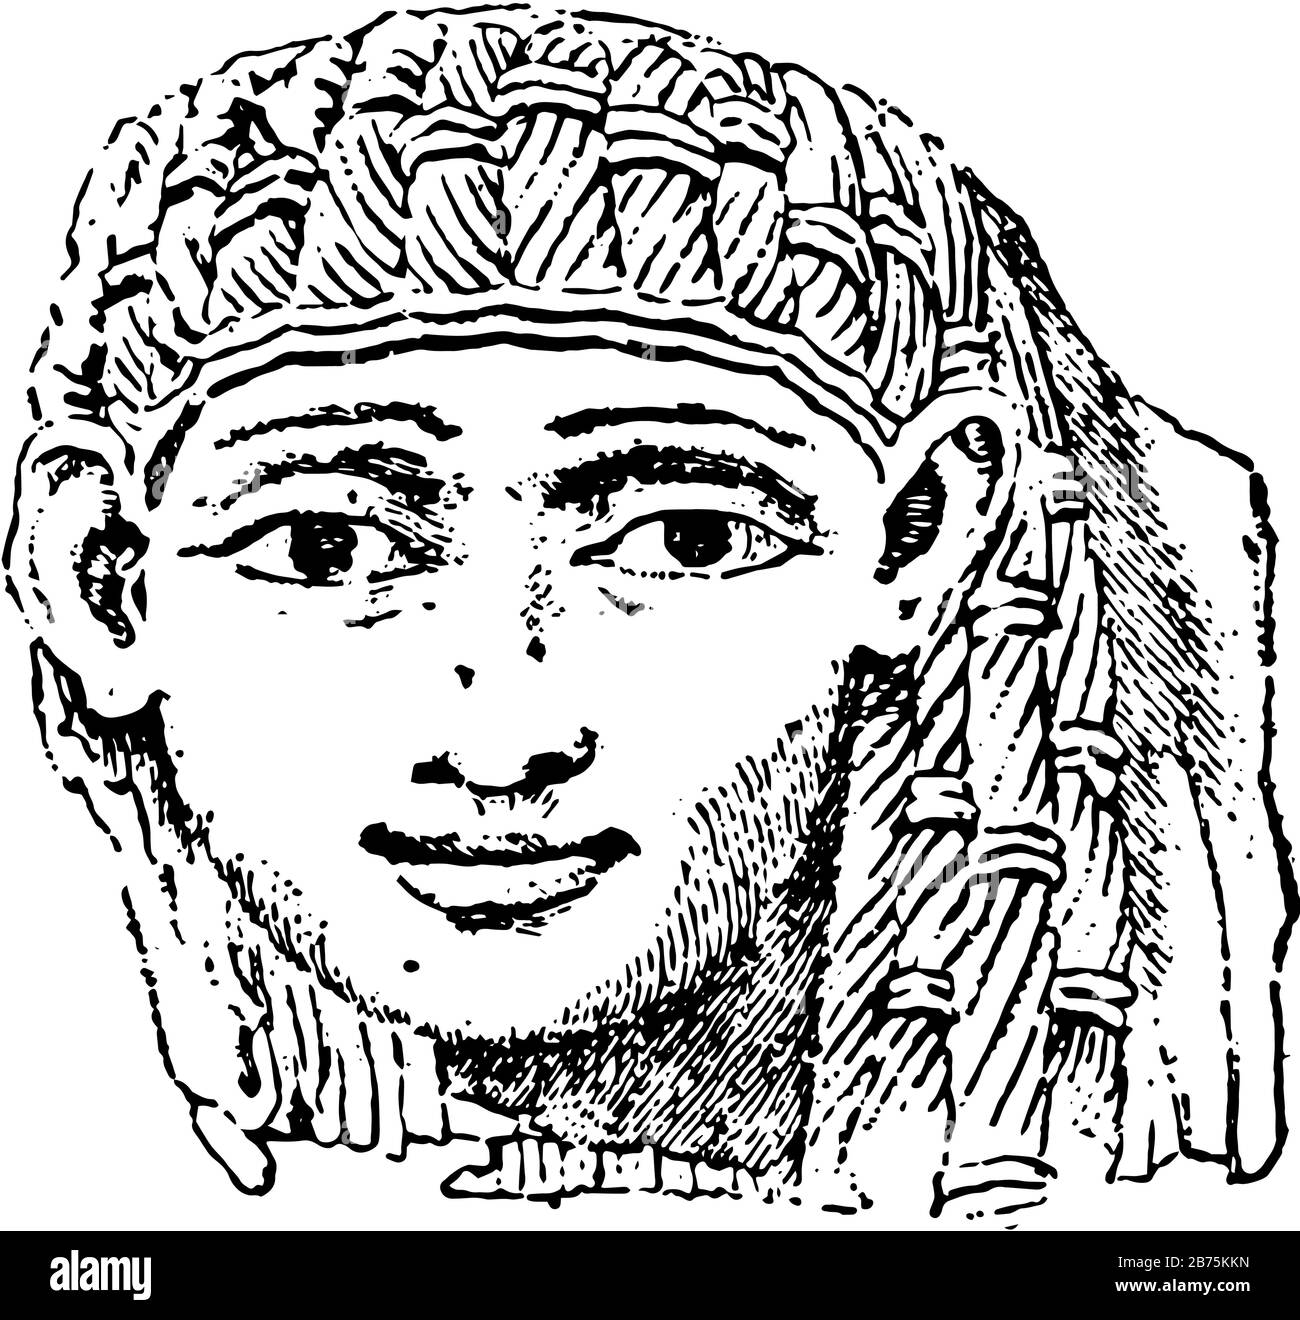 Ivory Carving, Female Head in High Reliefe, Ninive Collection, es verwendet scharfe Schneidwerkzeuge, Vintage Line Drawing oder Gravur Illustration. Stock Vektor